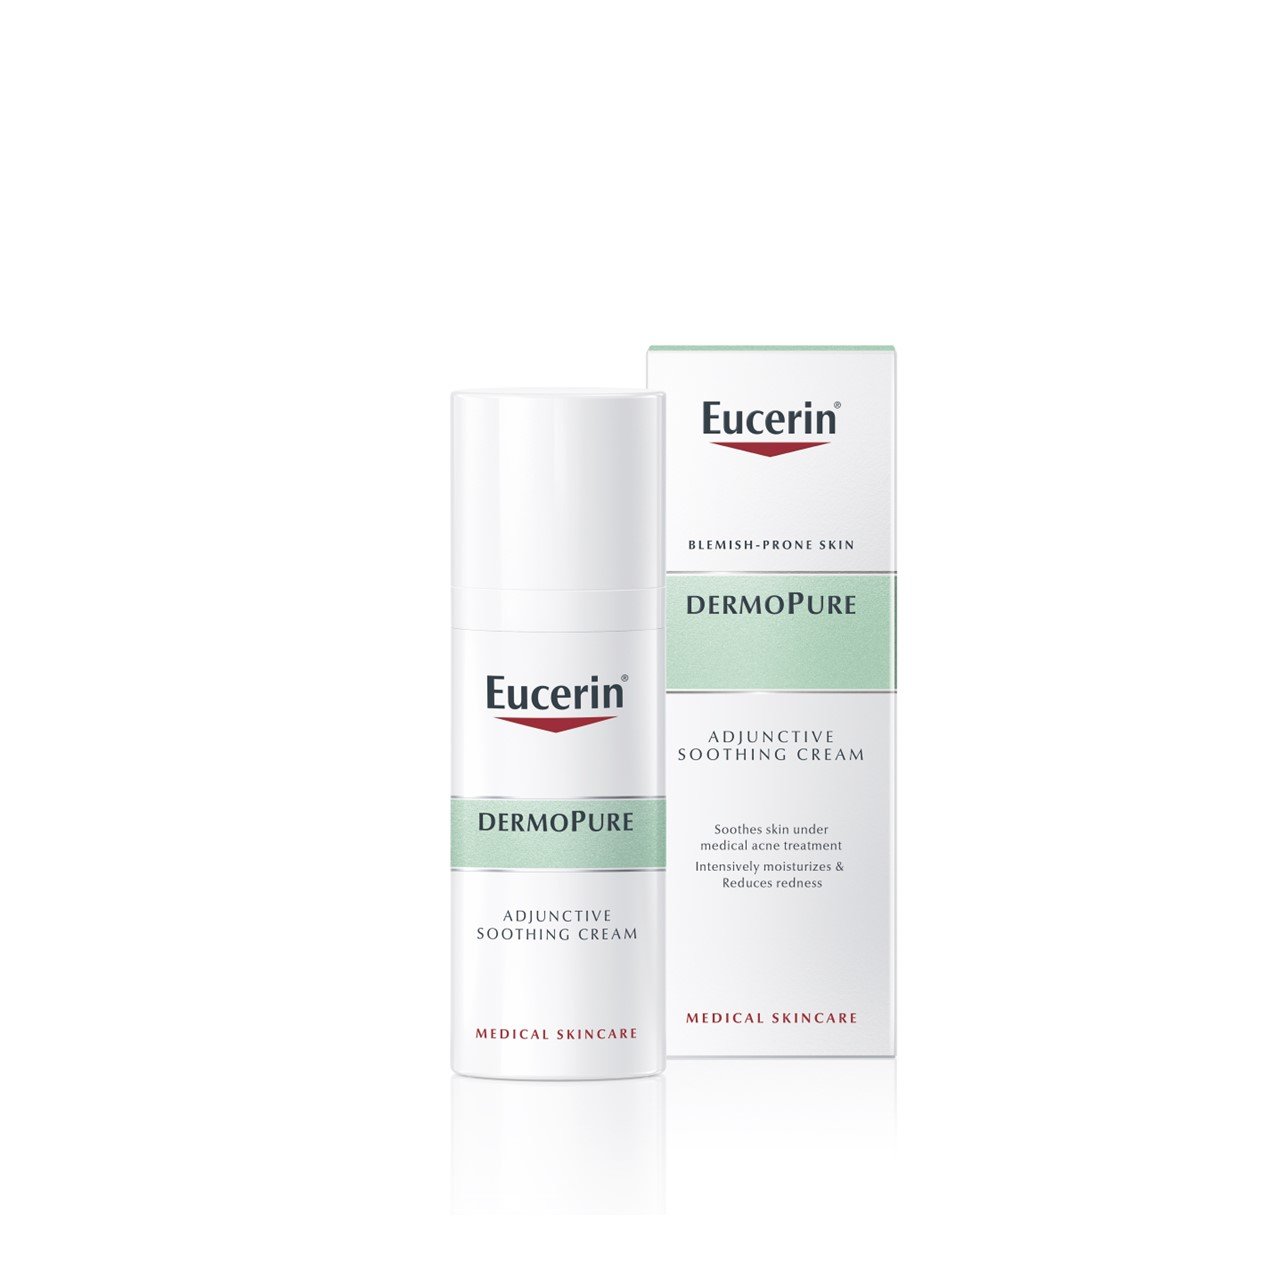 Eucerin DERMOPURE Oil Control Adjunctive Soothing Cream 50ml (1.69floz)